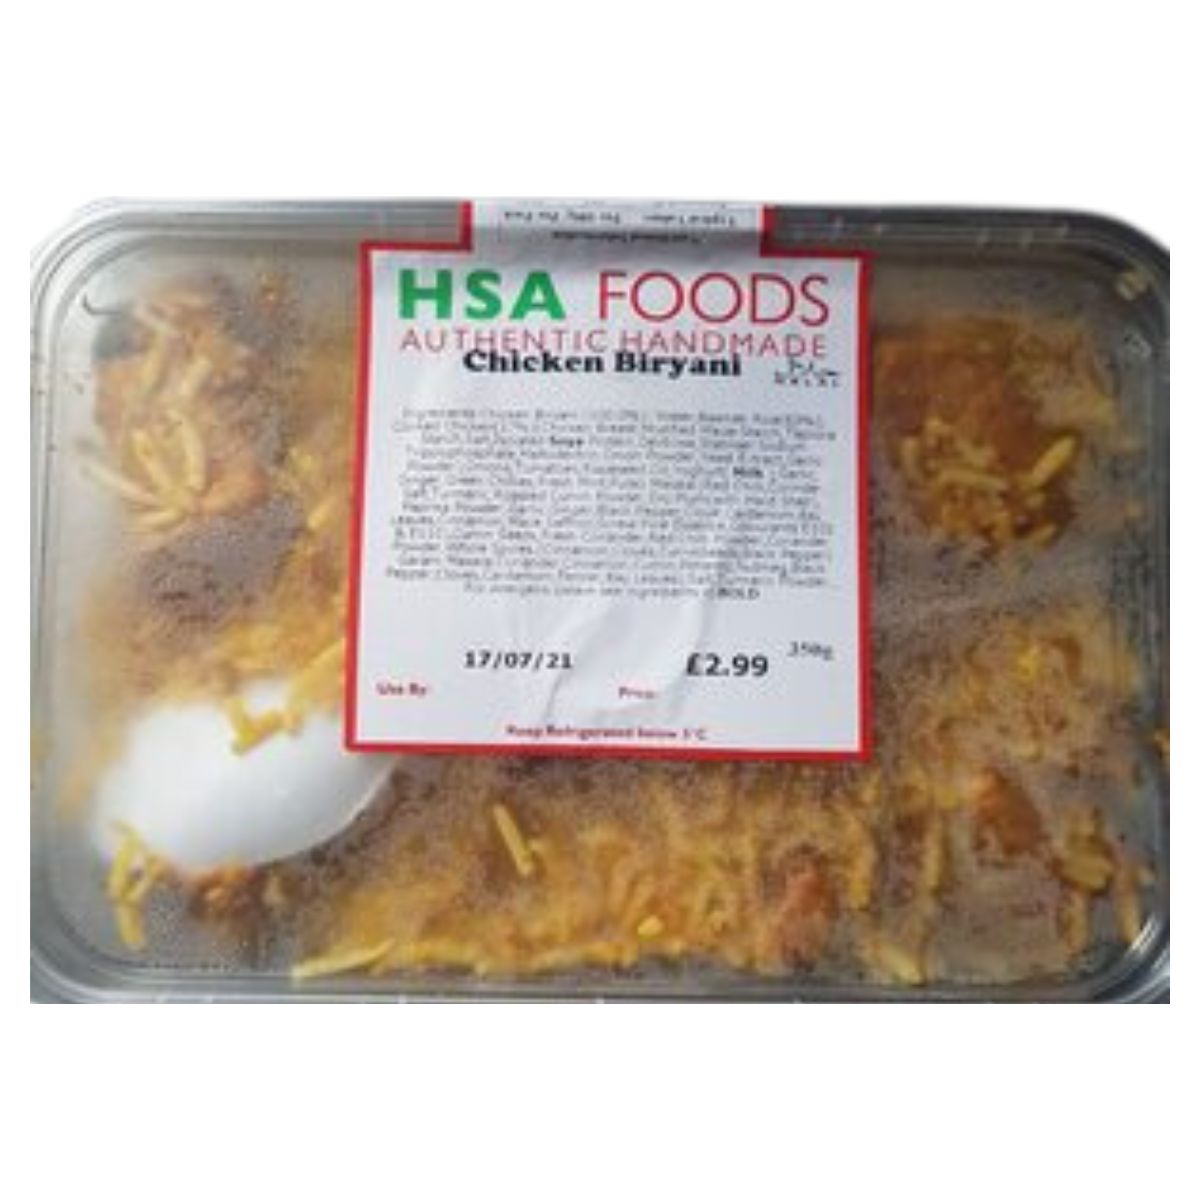 Hsa foods Chicken Biryani in a plastic container.